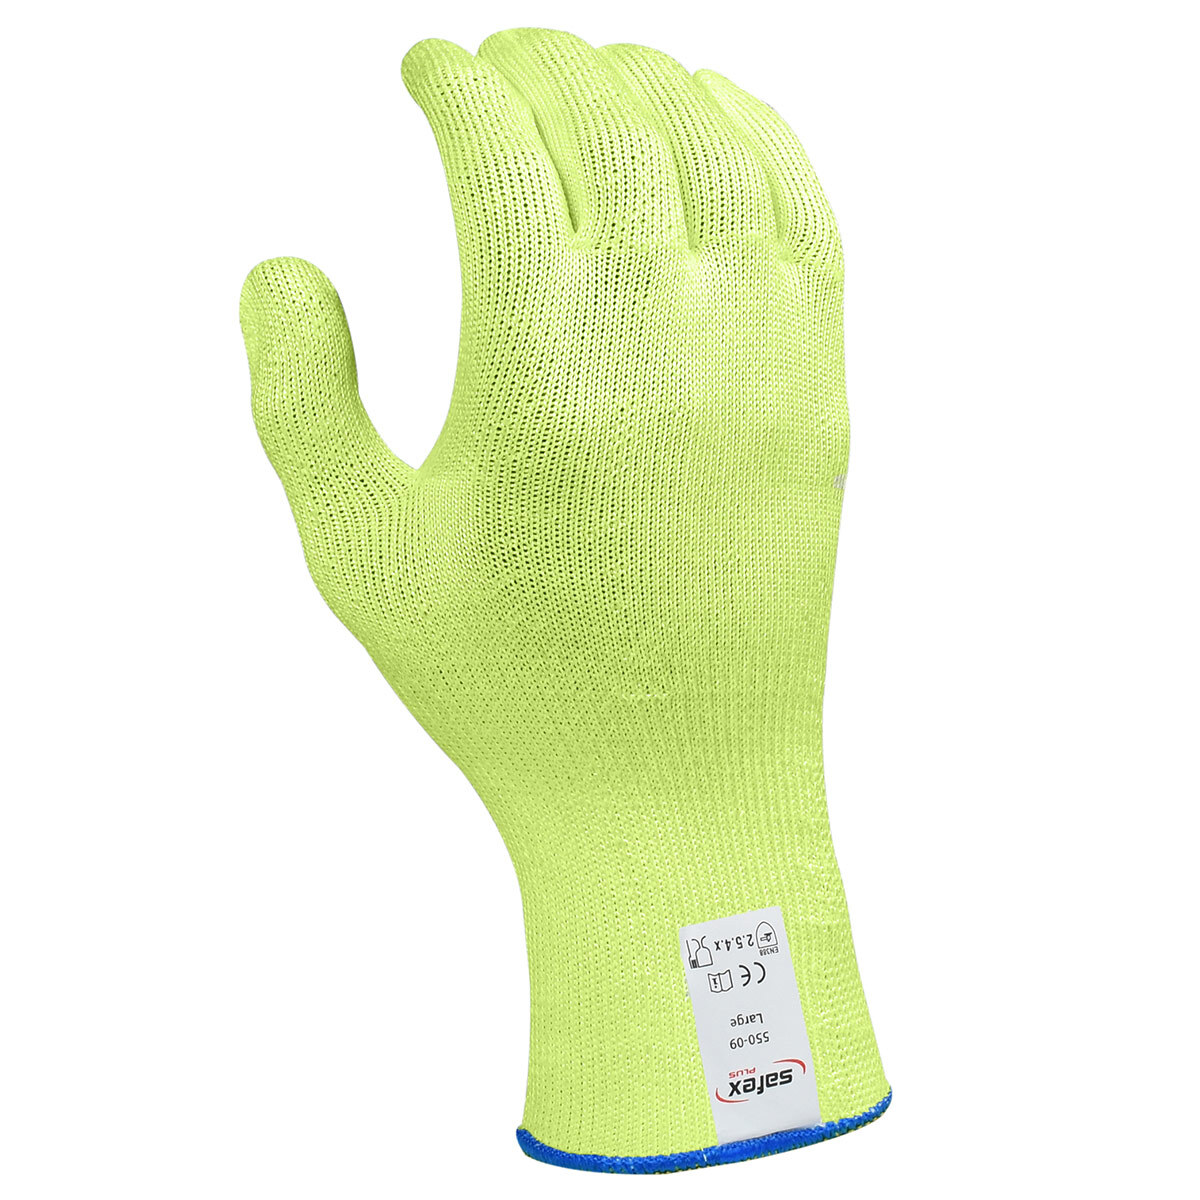 Safex Plus Level 5 Cut Resistant Glove - Fluro Yellow